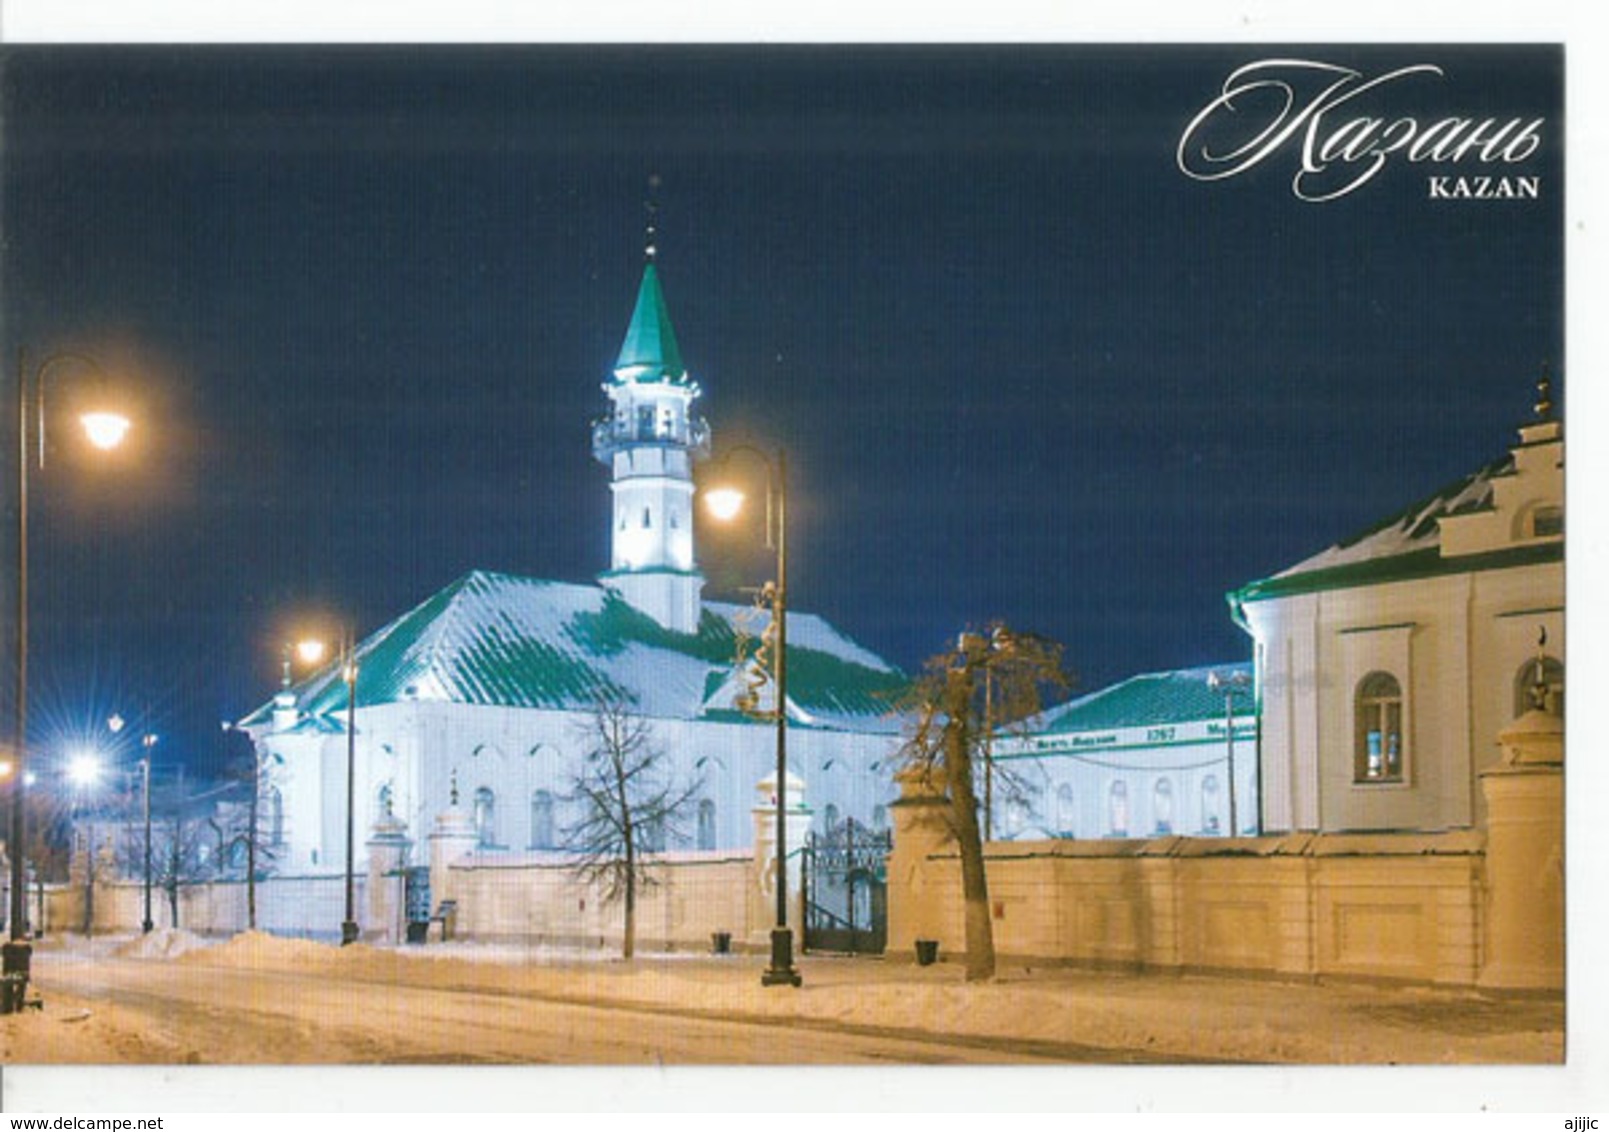 The Märcani Mosque , Kazan. Republic Of Tatarstan, Russia. , Postcard Uncirculated, Mint Condition - Islam